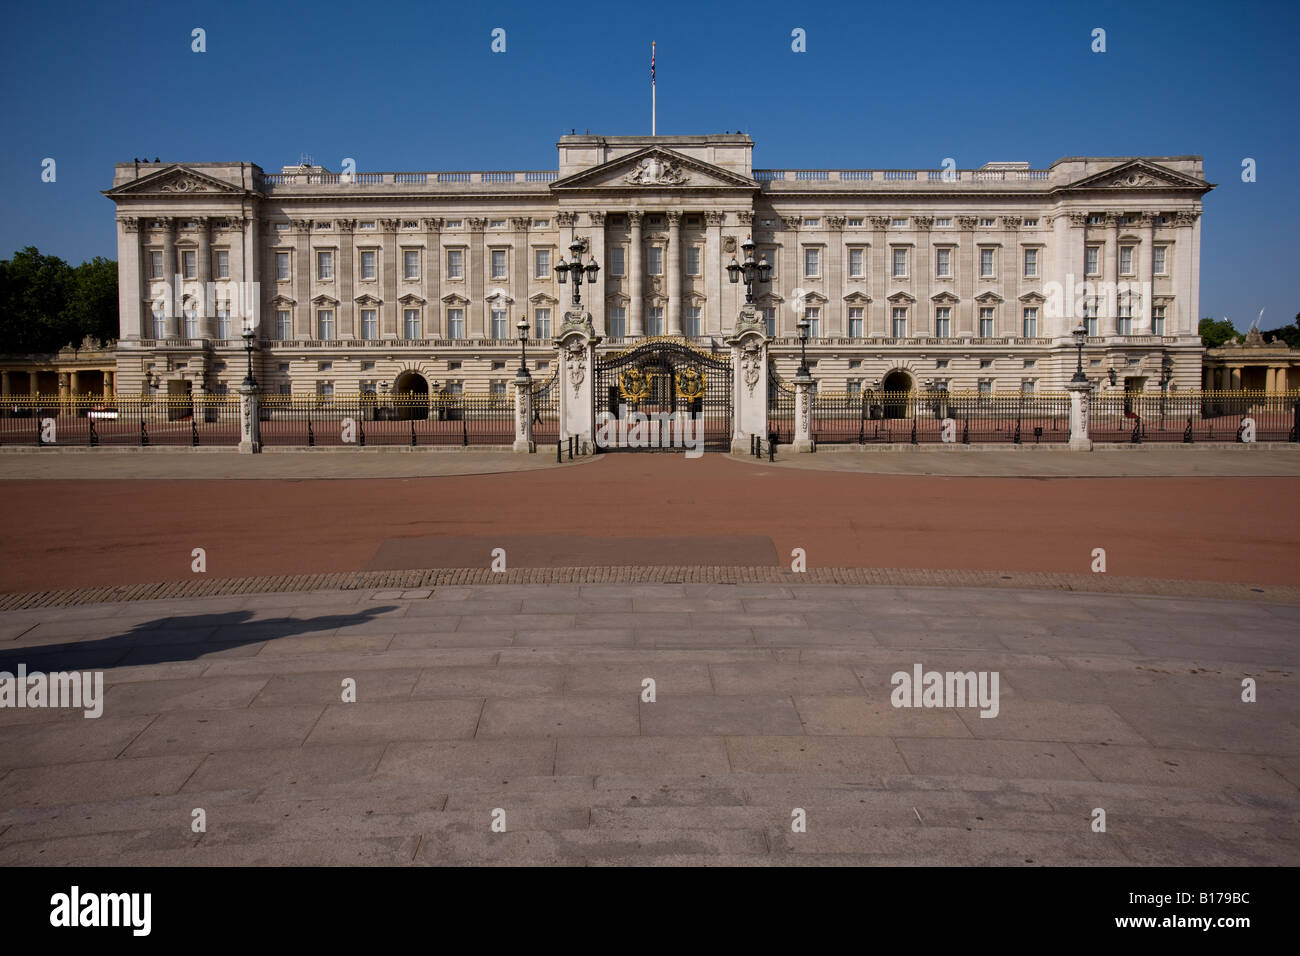 Buckingham Palace, Royal residence of Queen Elizabeth II when in London. Stock Photo